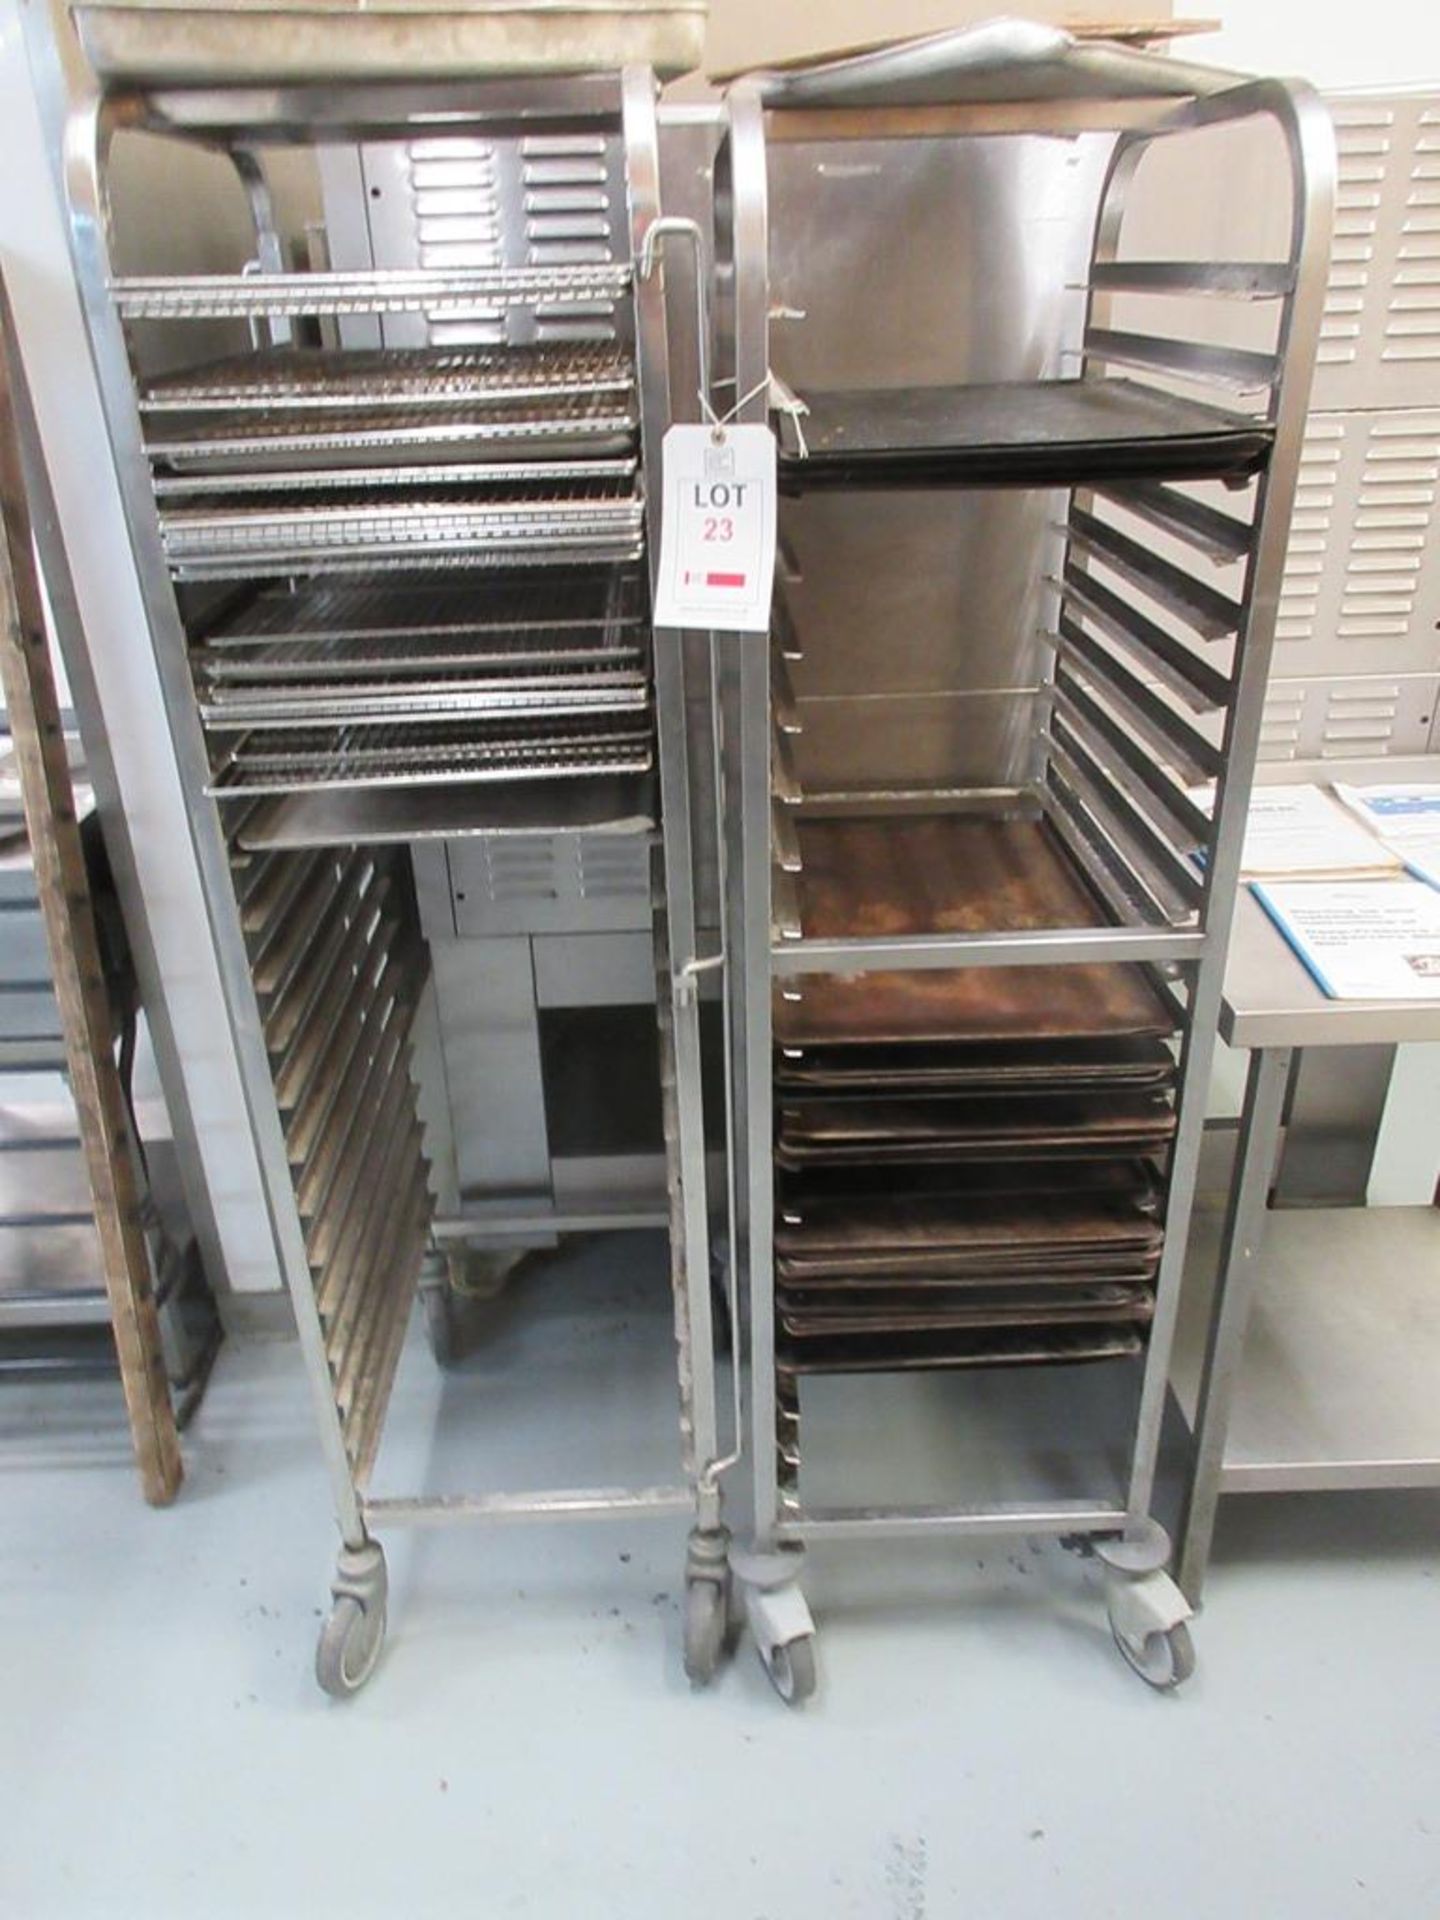 Three multi shelf stainless steel mobile racks